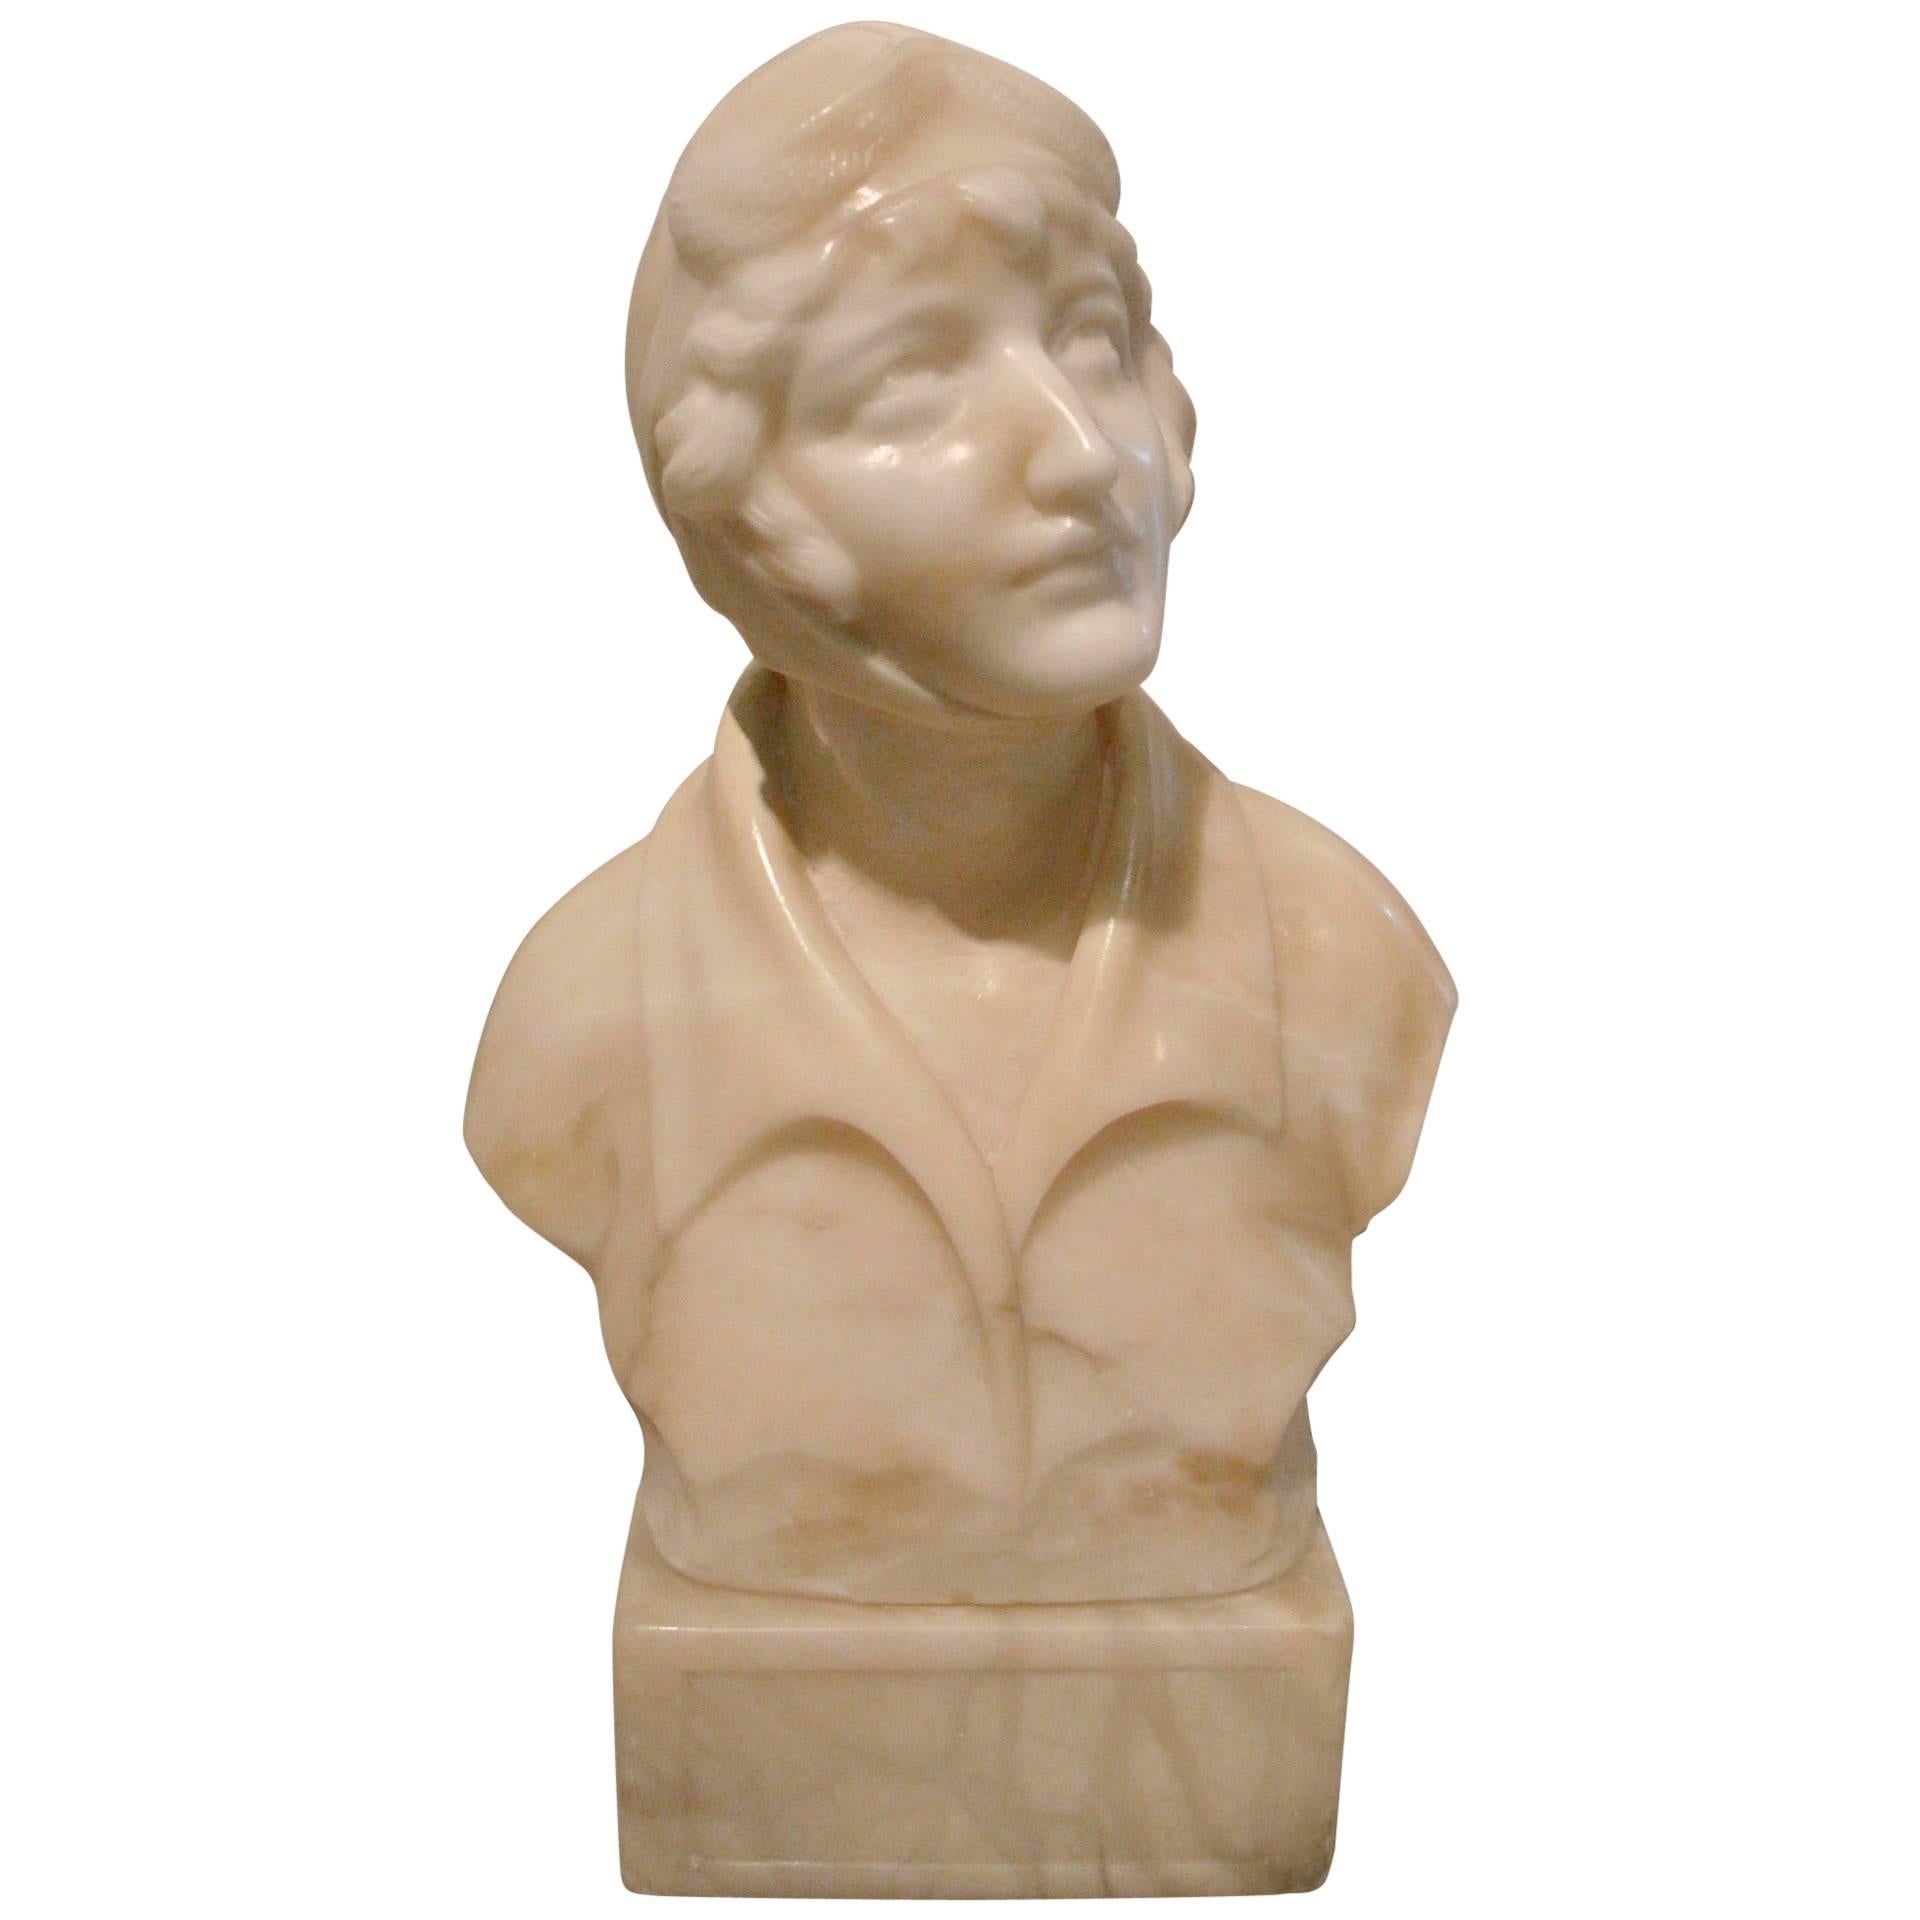 Alabaster Sculpture of Female Pilot Amelia Earhart 1920s Aviation Memorabilia